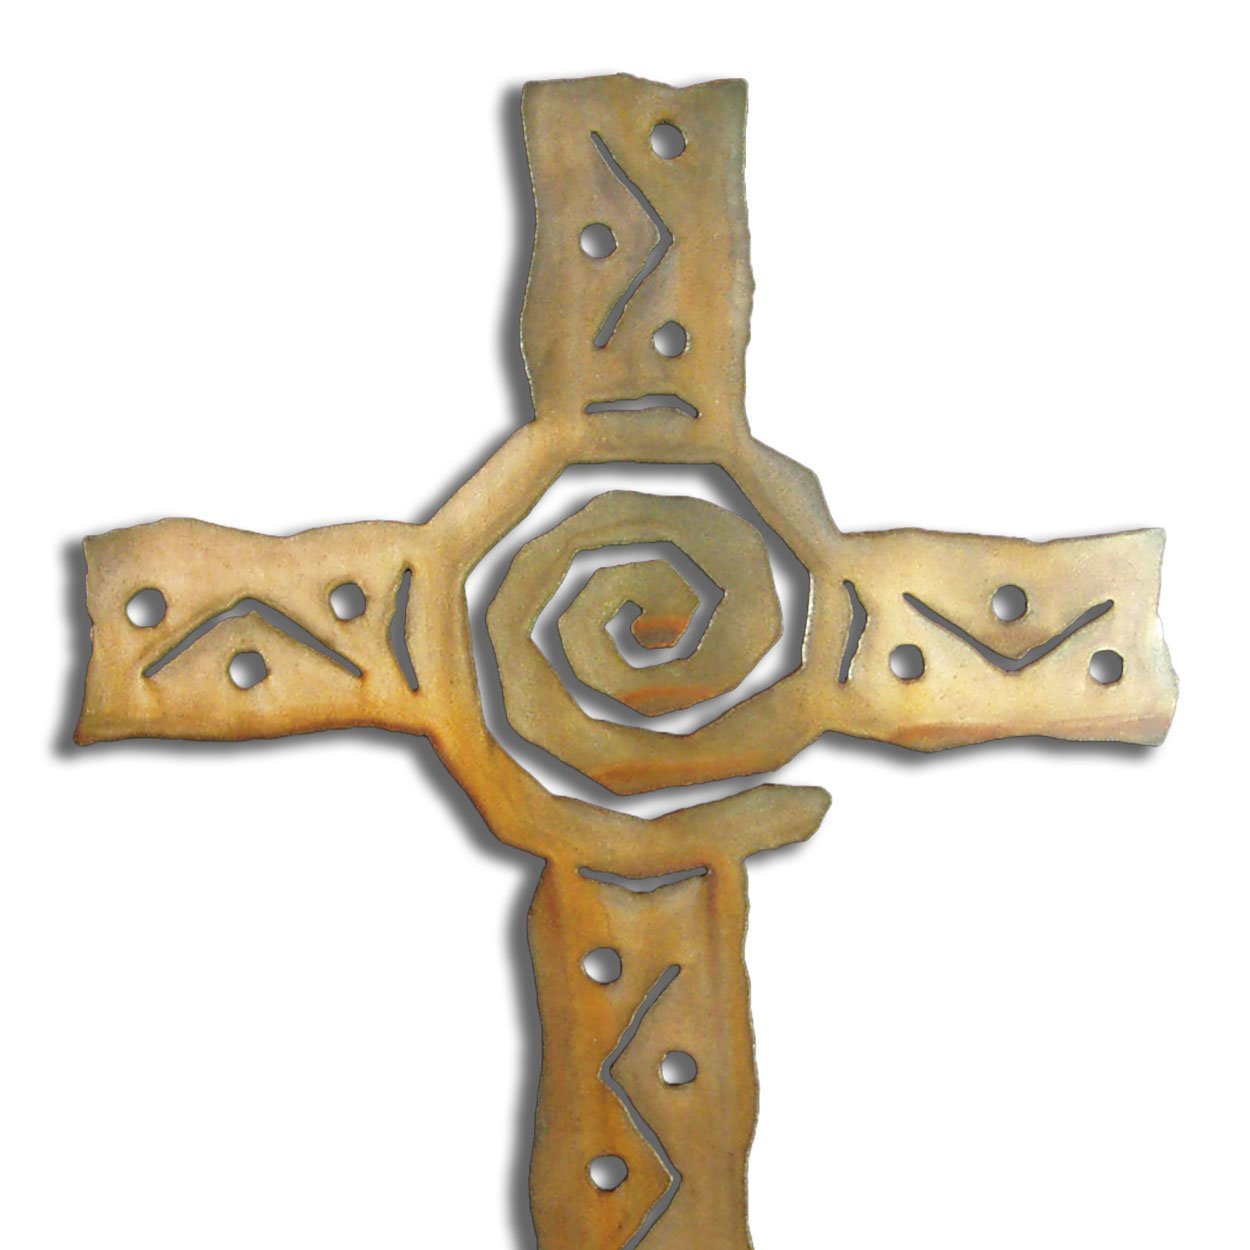 165242 - 18-inch medium Spiral Cross 3D Metal Wall Art in a rich rust finish